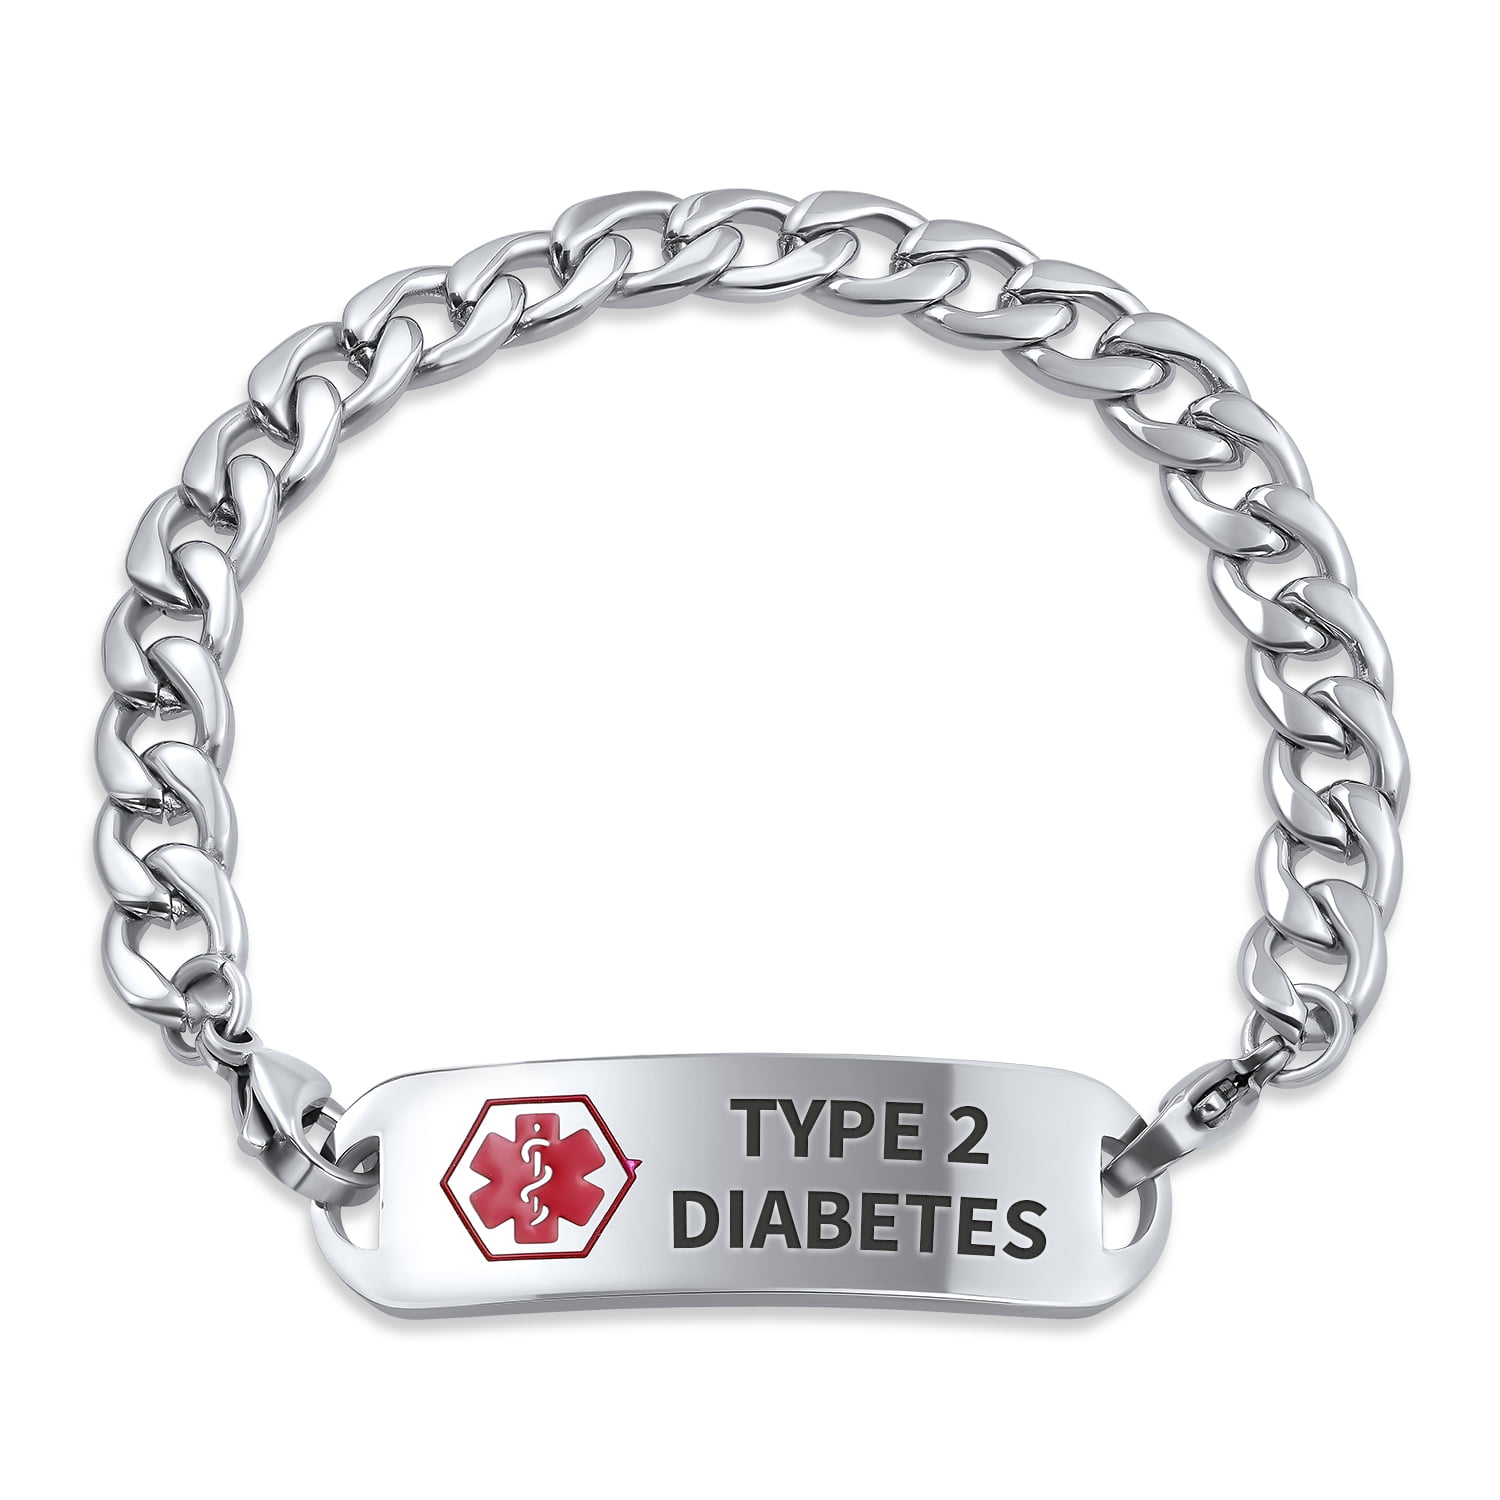 Diabetes Bracelets by American Medical ID